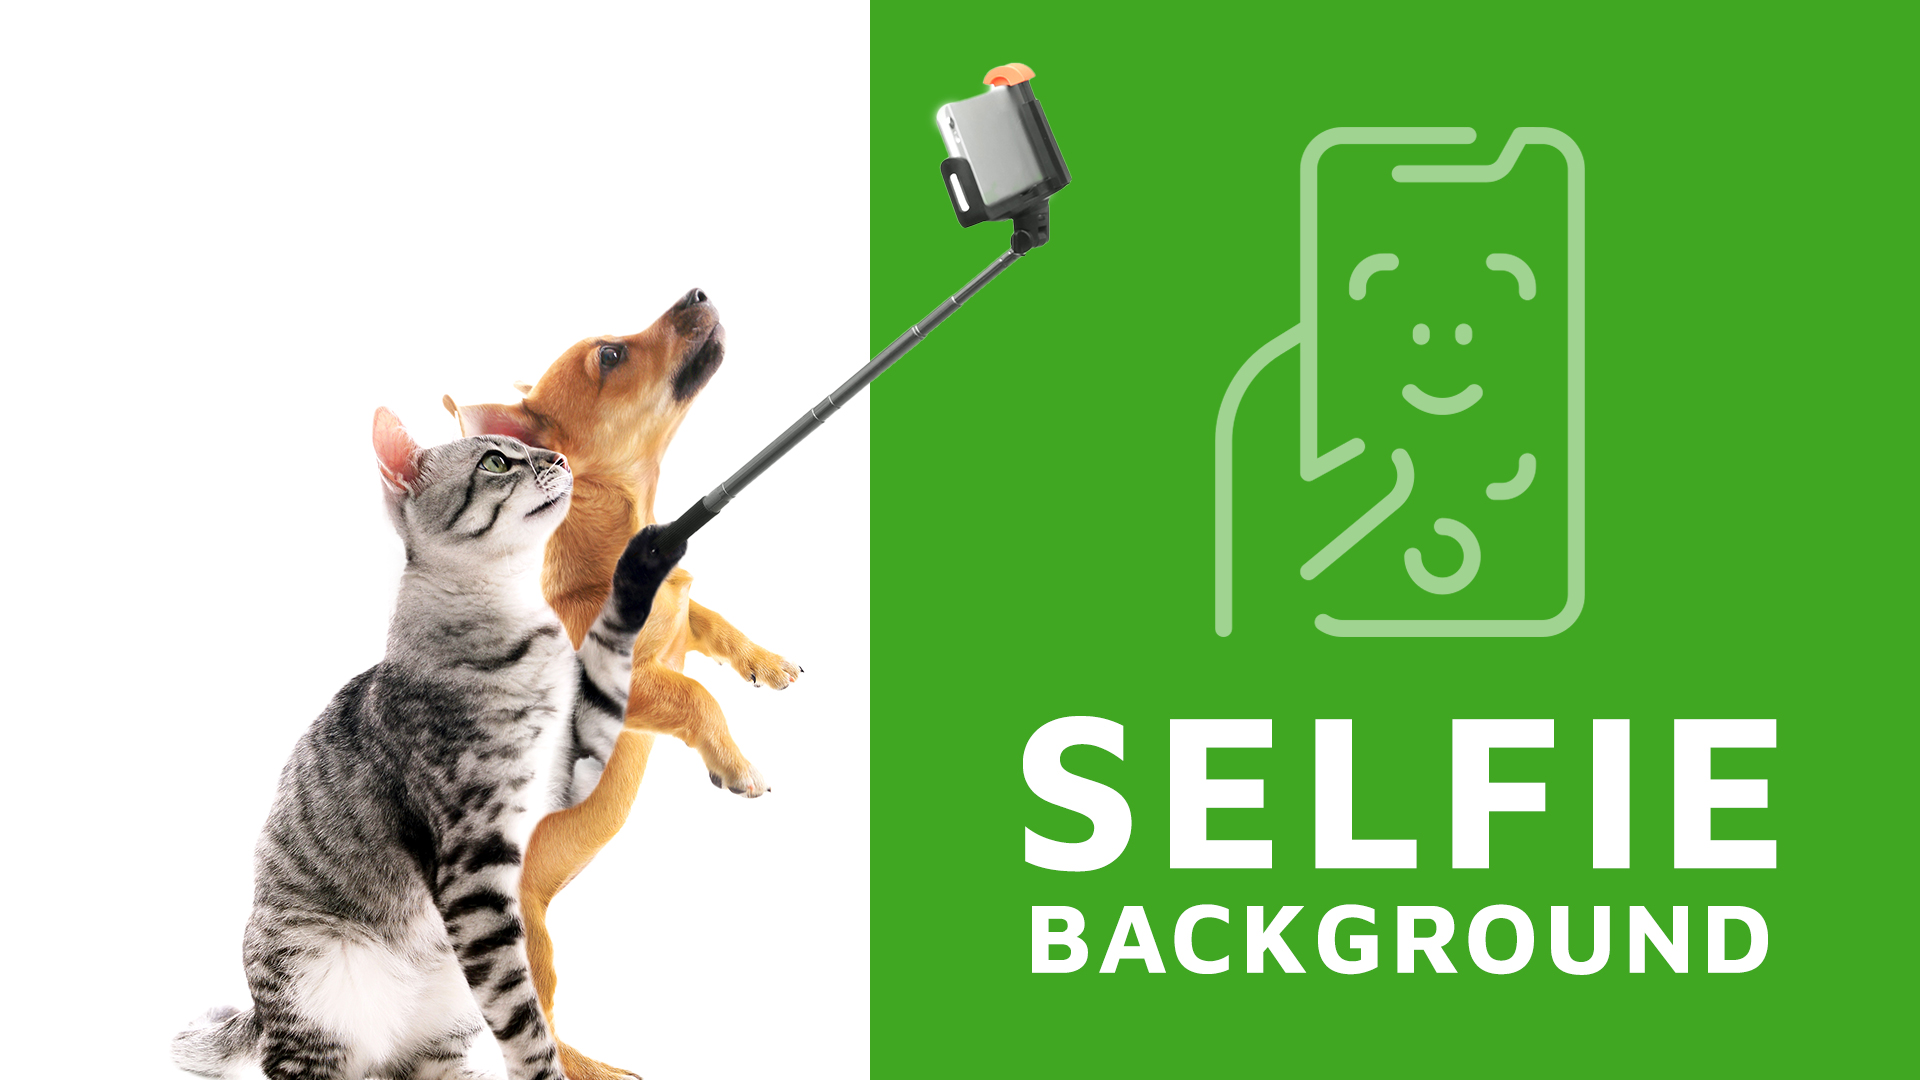 Selfie camera background in the App